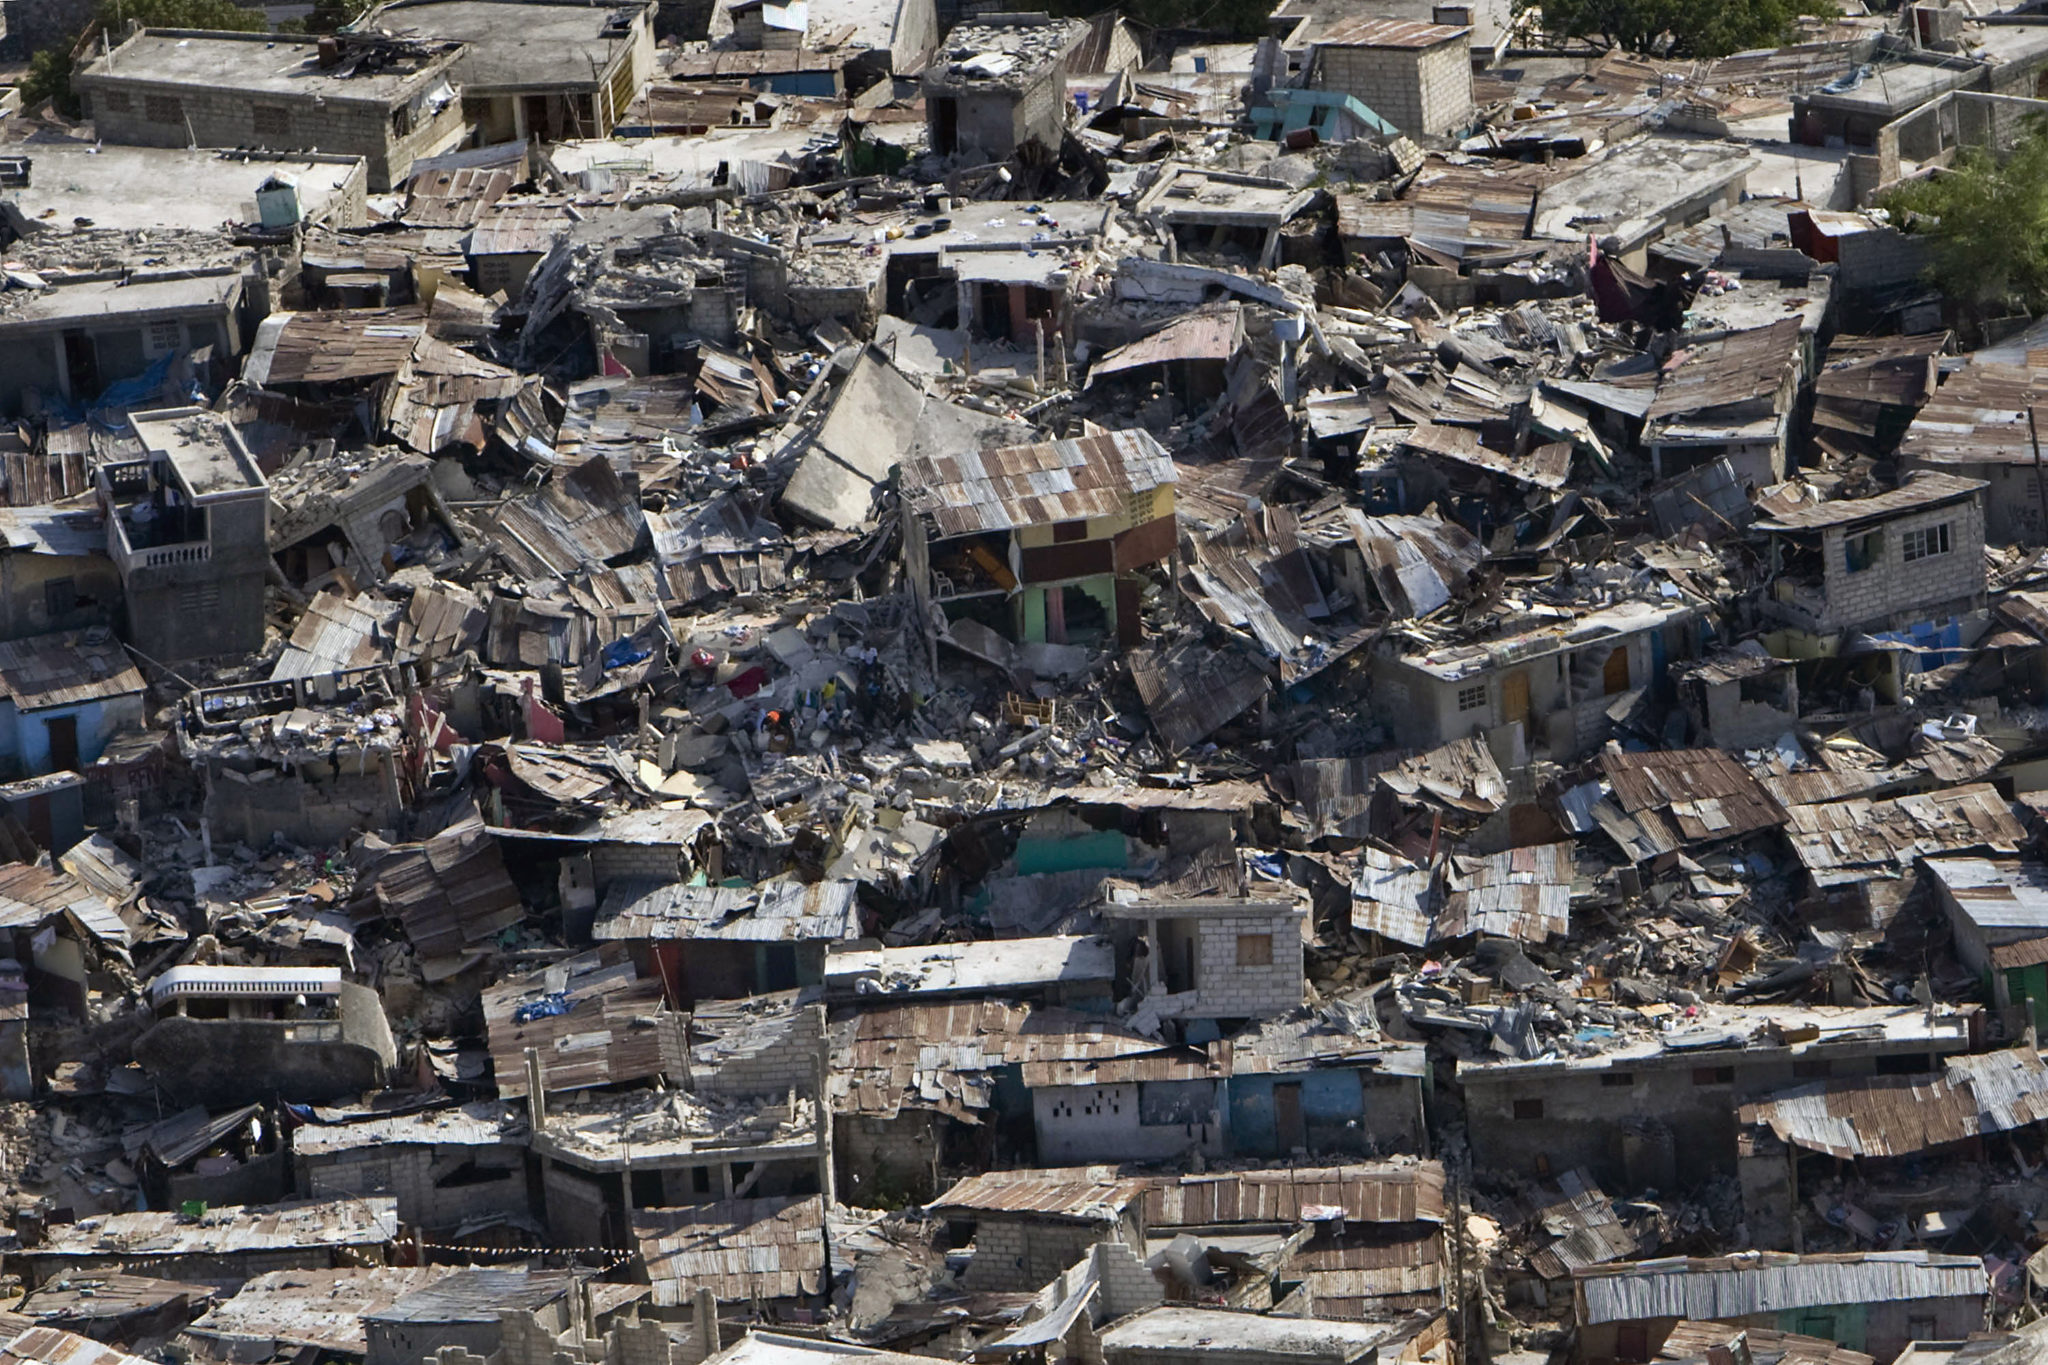 https://disasterphilanthropy.org/wp-content/uploads/2010/01/Haiti_earthquake_damage-2048x1365.jpg